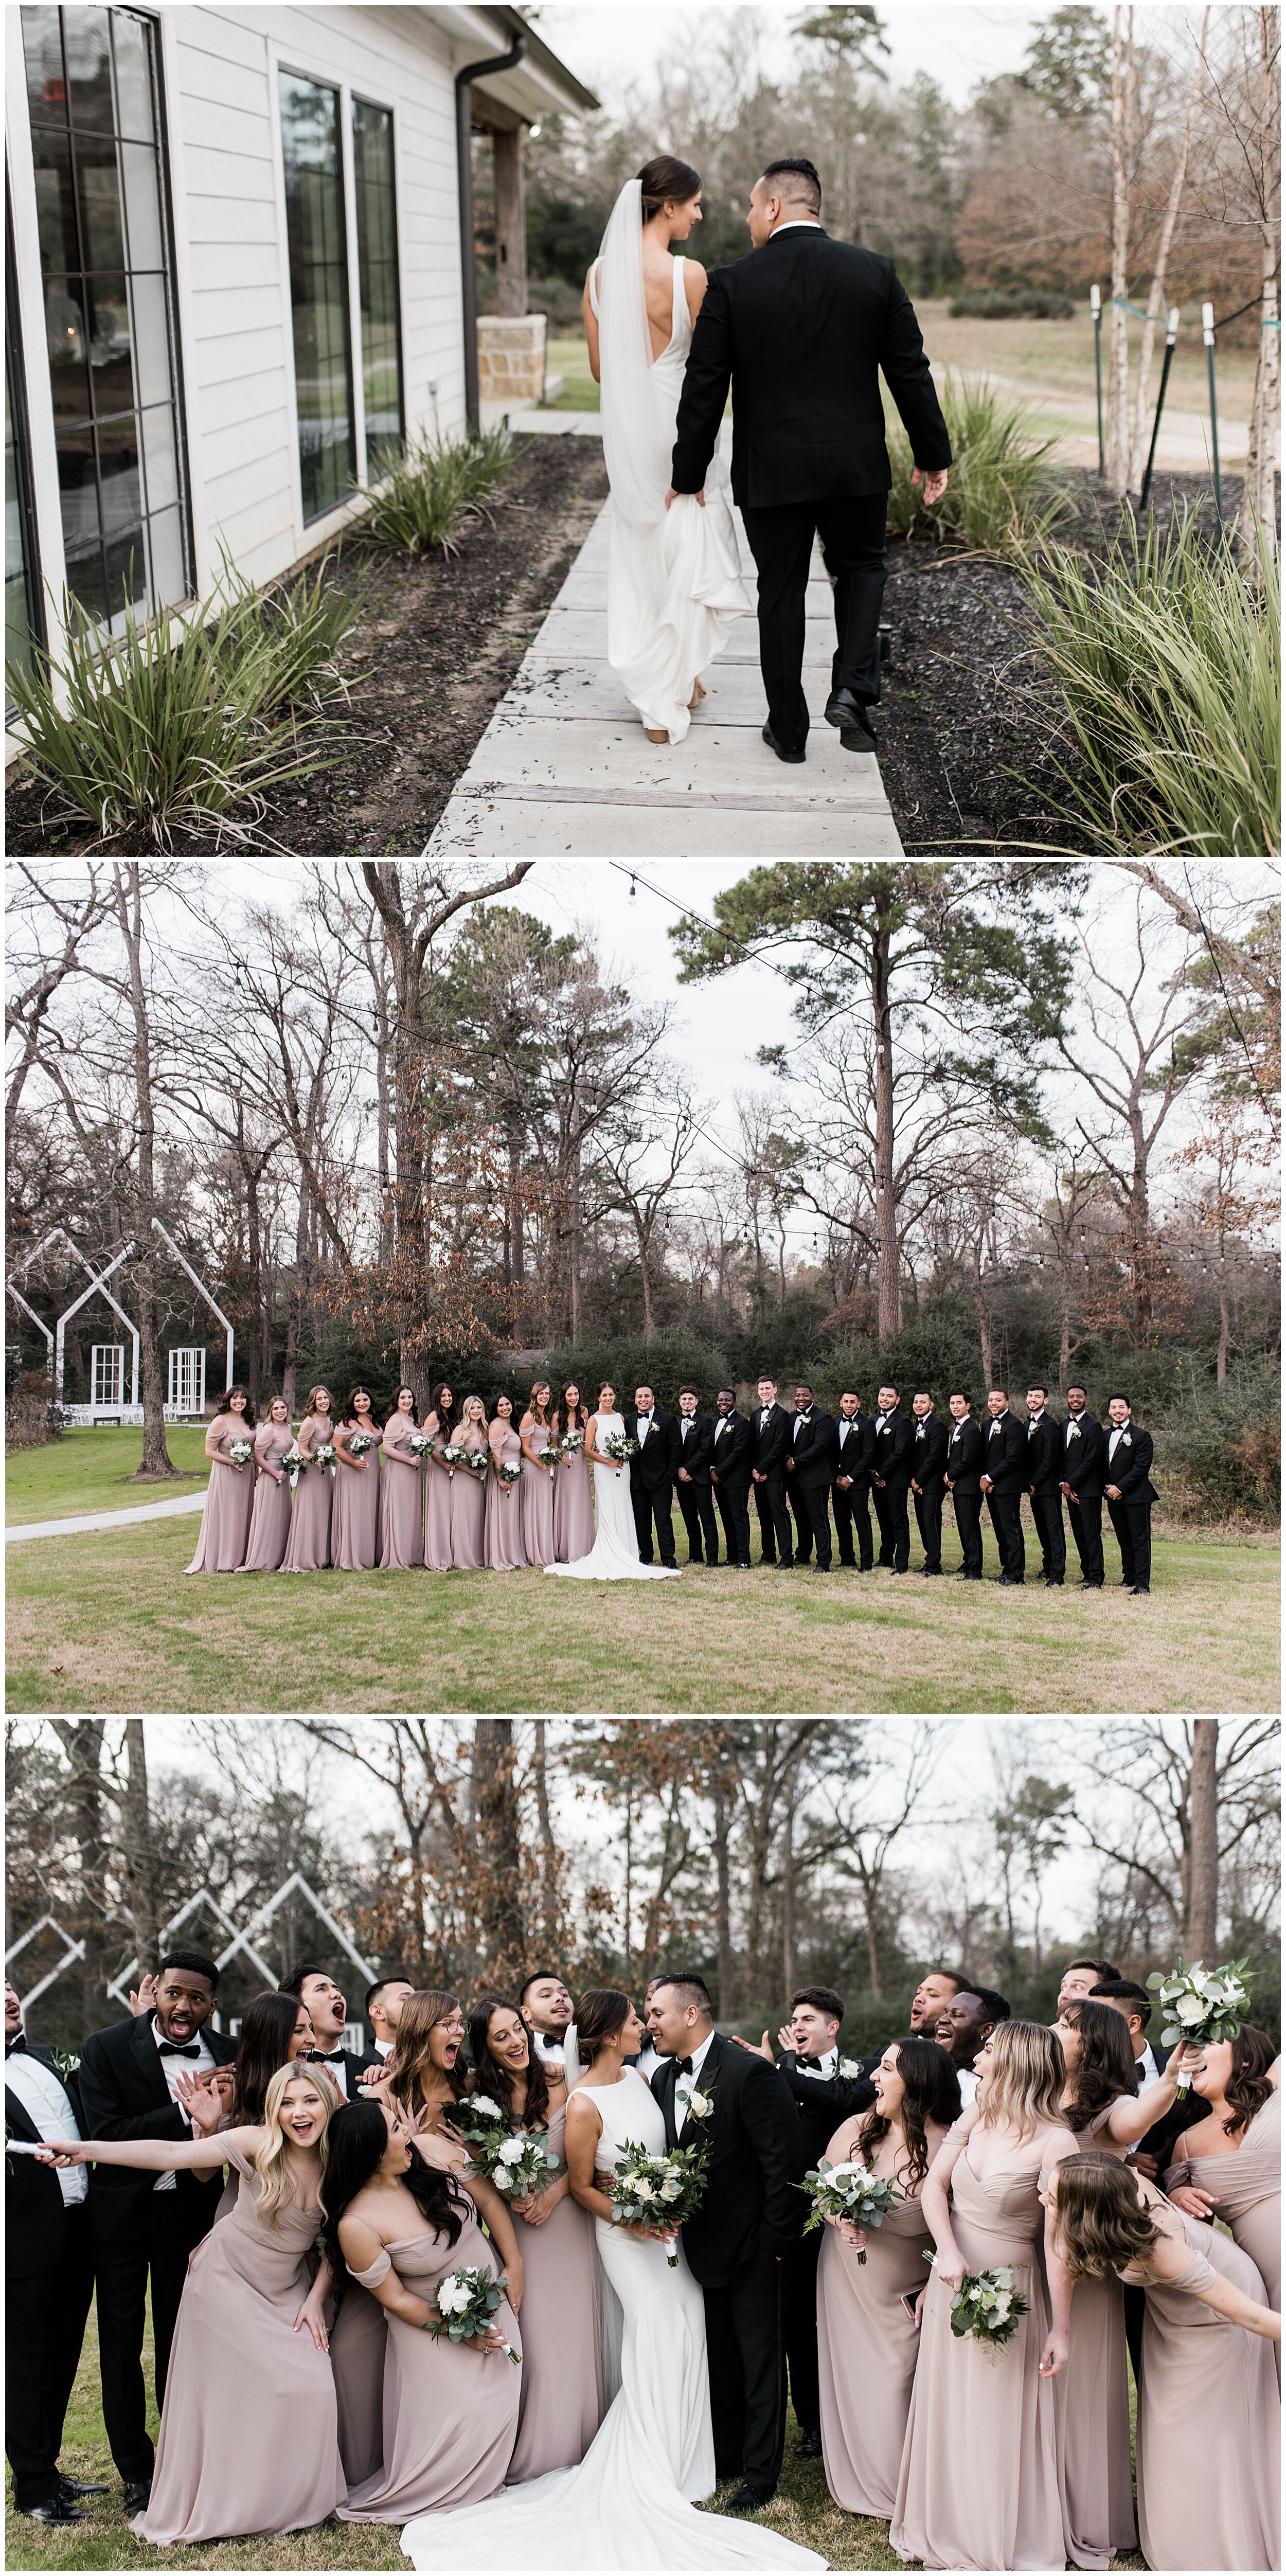  Classic wedding at the Meekermark | Fort Worth Wedding Photographer | Real Houston wedding | www.jordanmitchellphotography.com 